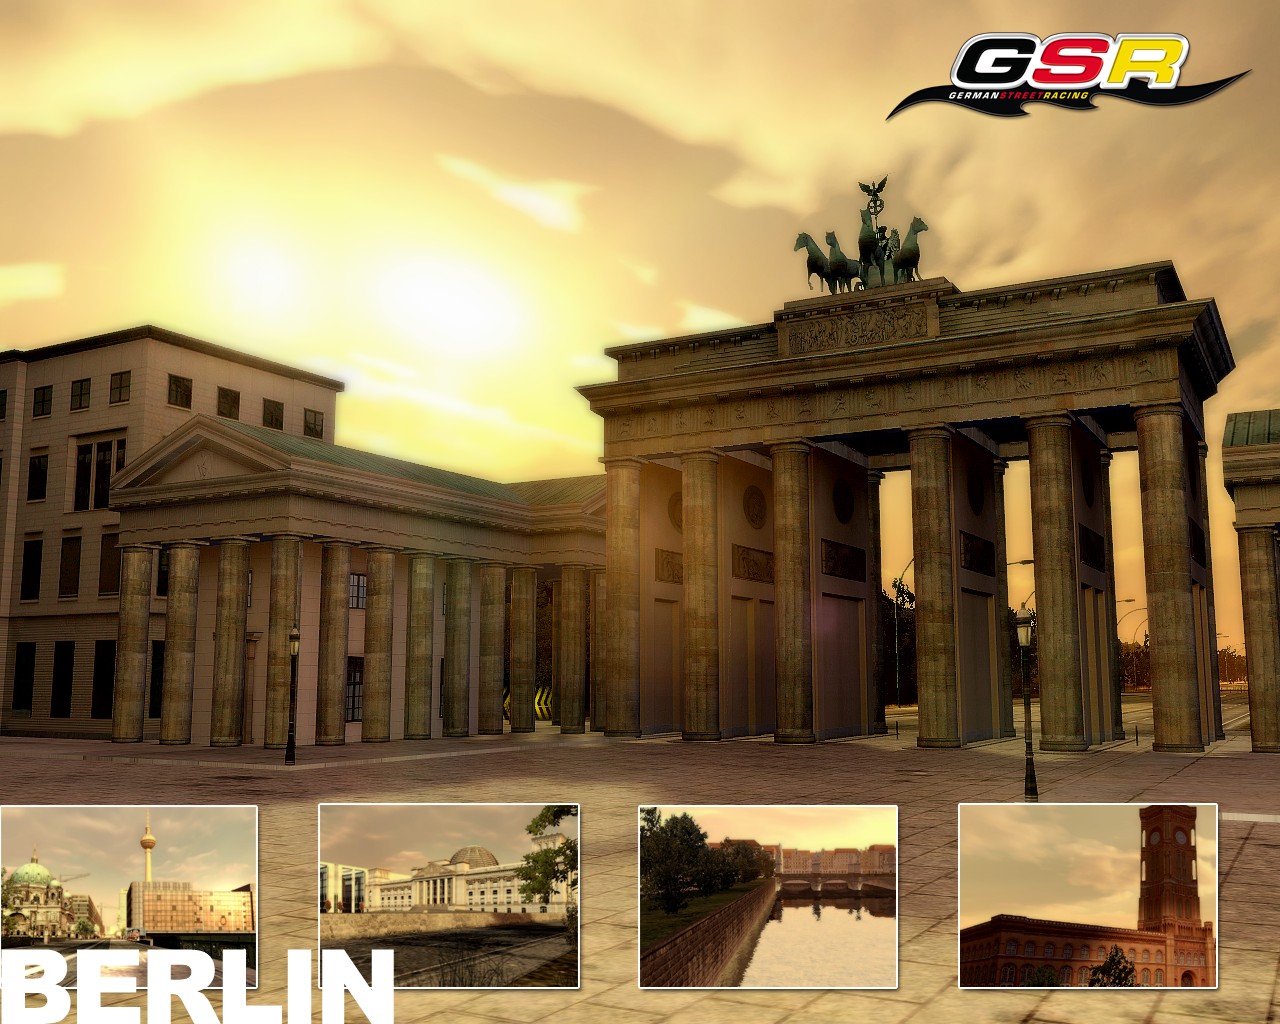    GSR: German Street Racing